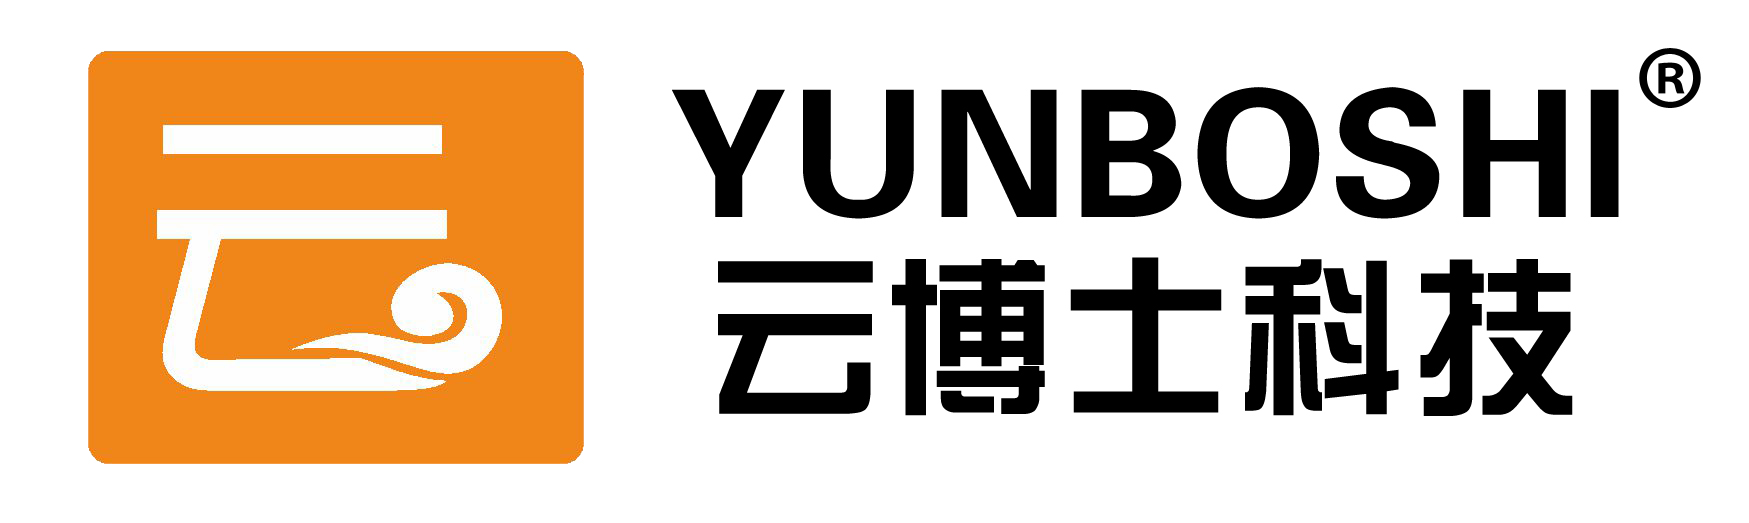 YUNBOSHI kündigt Konferenz für das dritte Quartal an